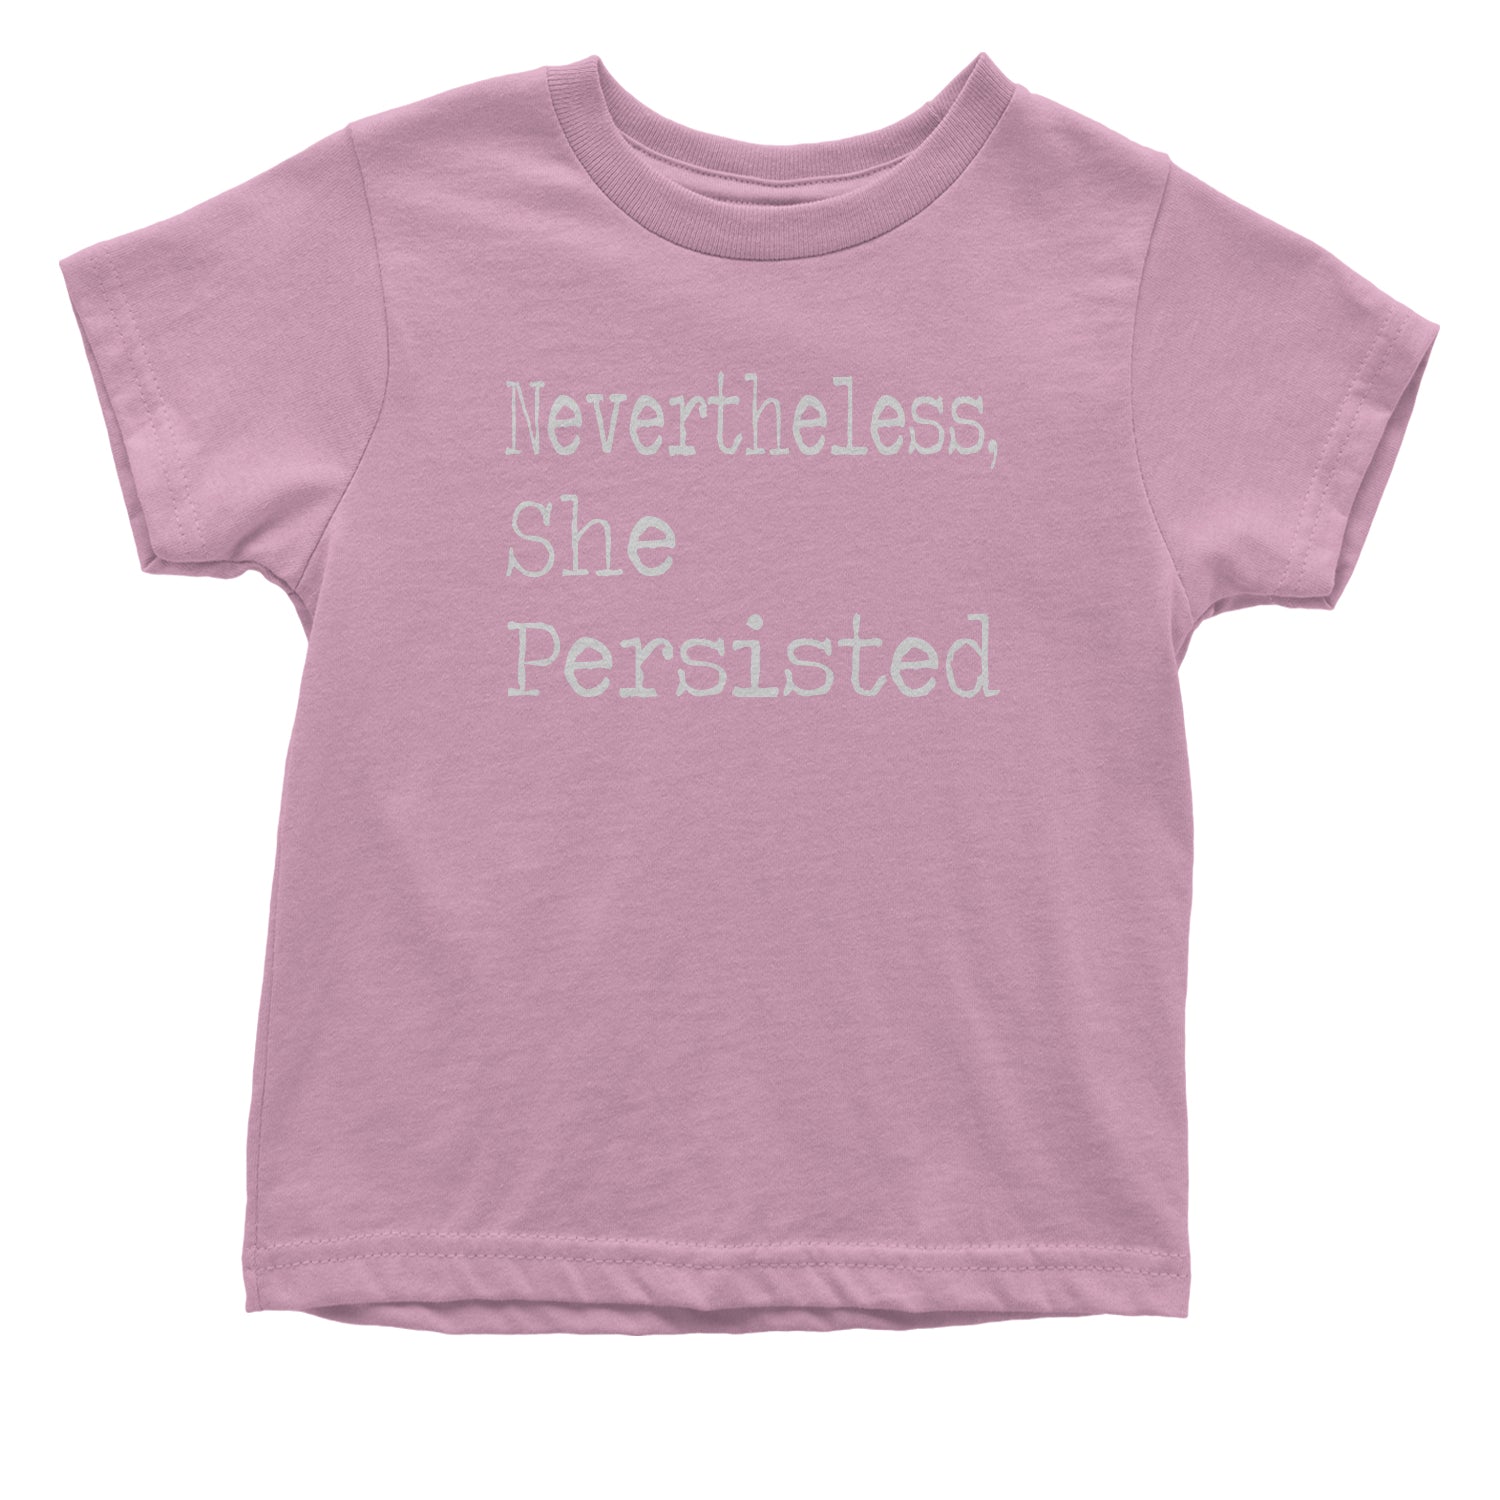 Nevertheless, She Persisted Toddler T-Shirt 2020, feminism, feminist, kamala, letlizspeak, mamala, mcconnell, mitch, momala, mommala by Expression Tees